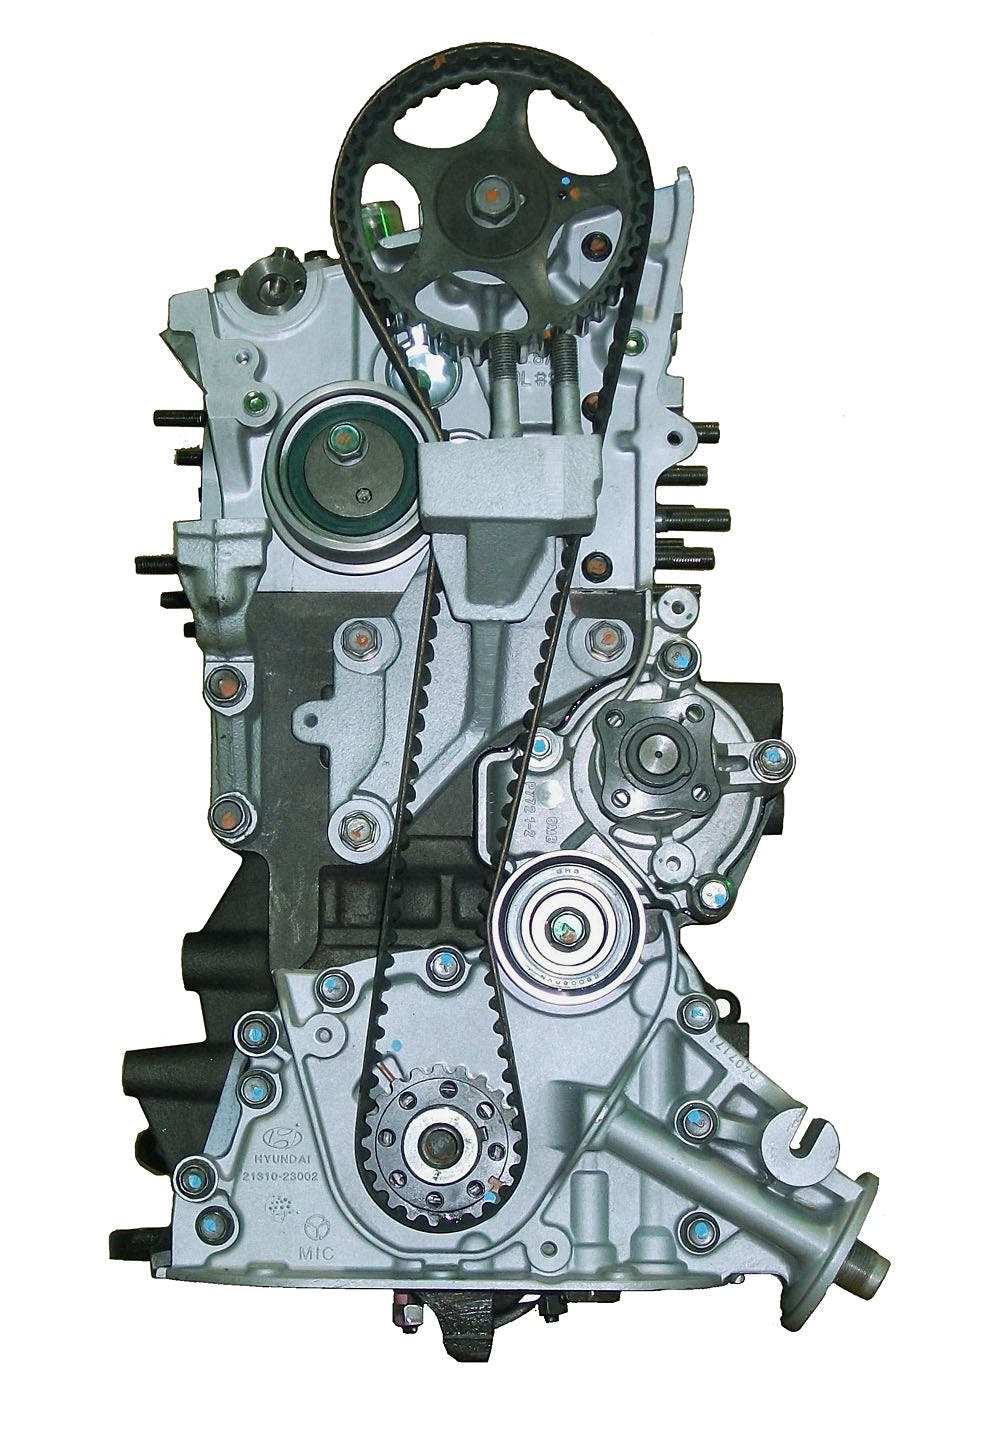 2L Inline-4 Engine for 2001-2002 Hyundai Elantra